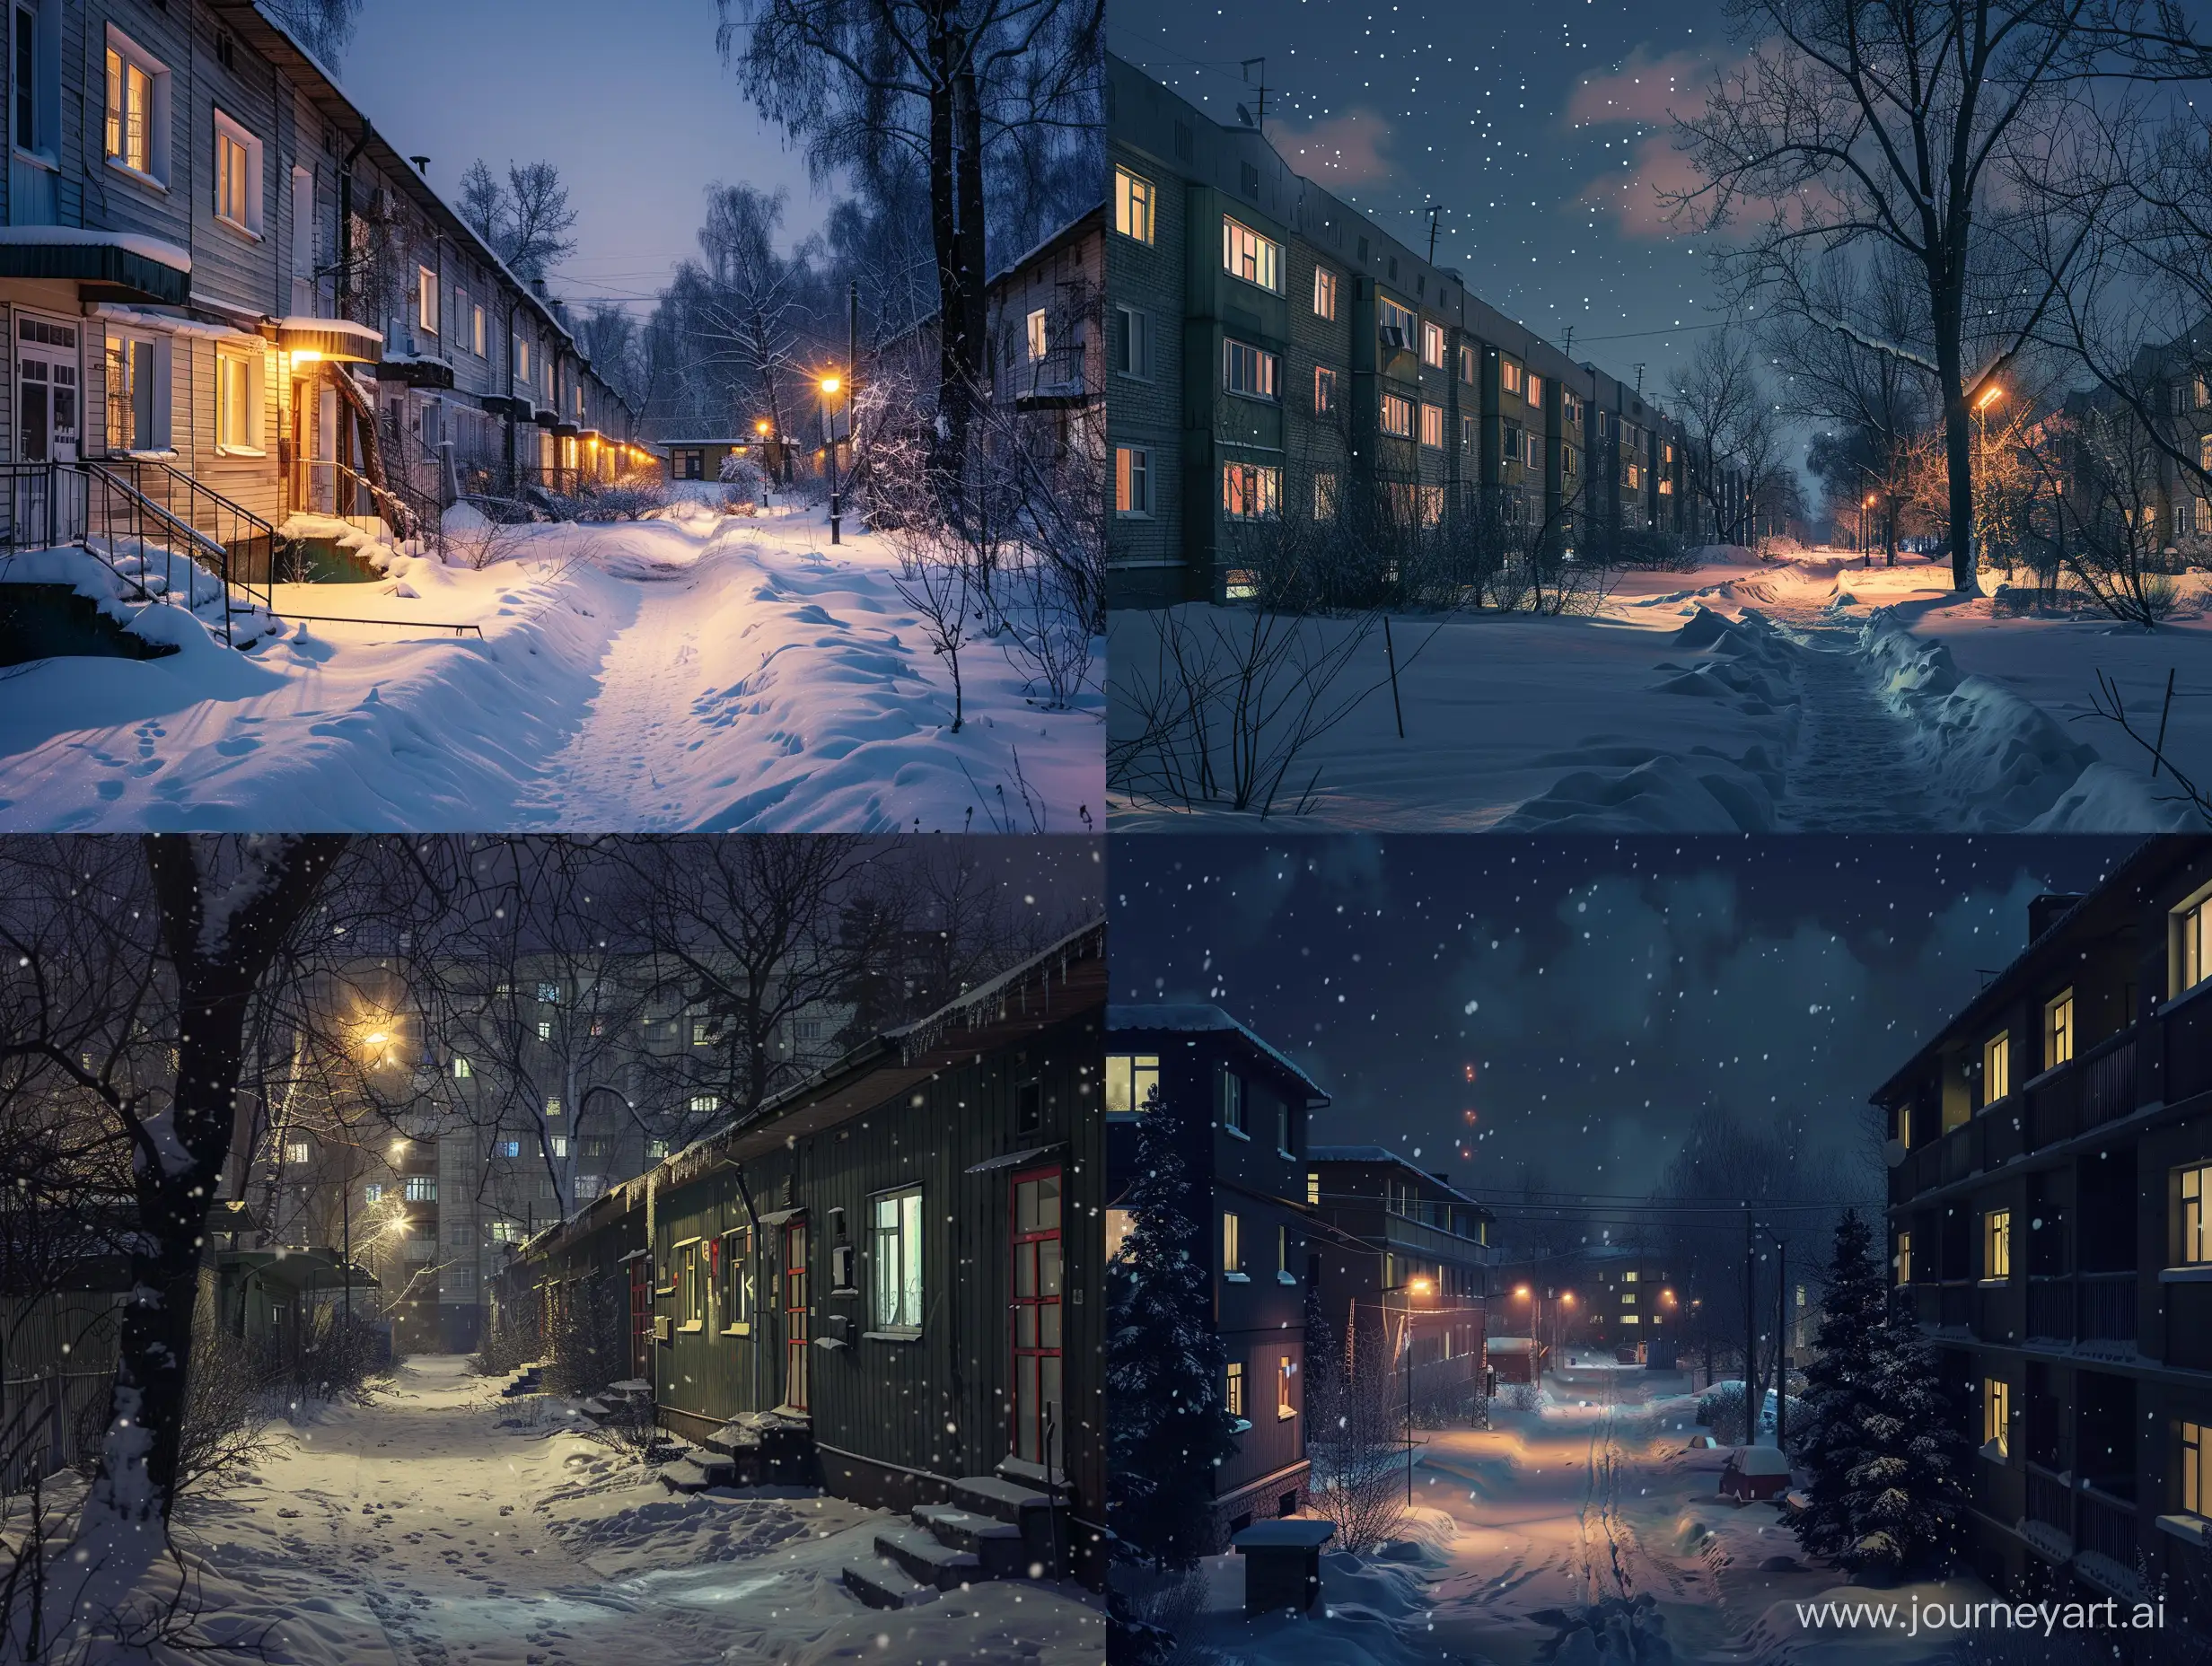 SovietEra-Panel-Houses-in-a-Cinematic-Winter-Night-Scene